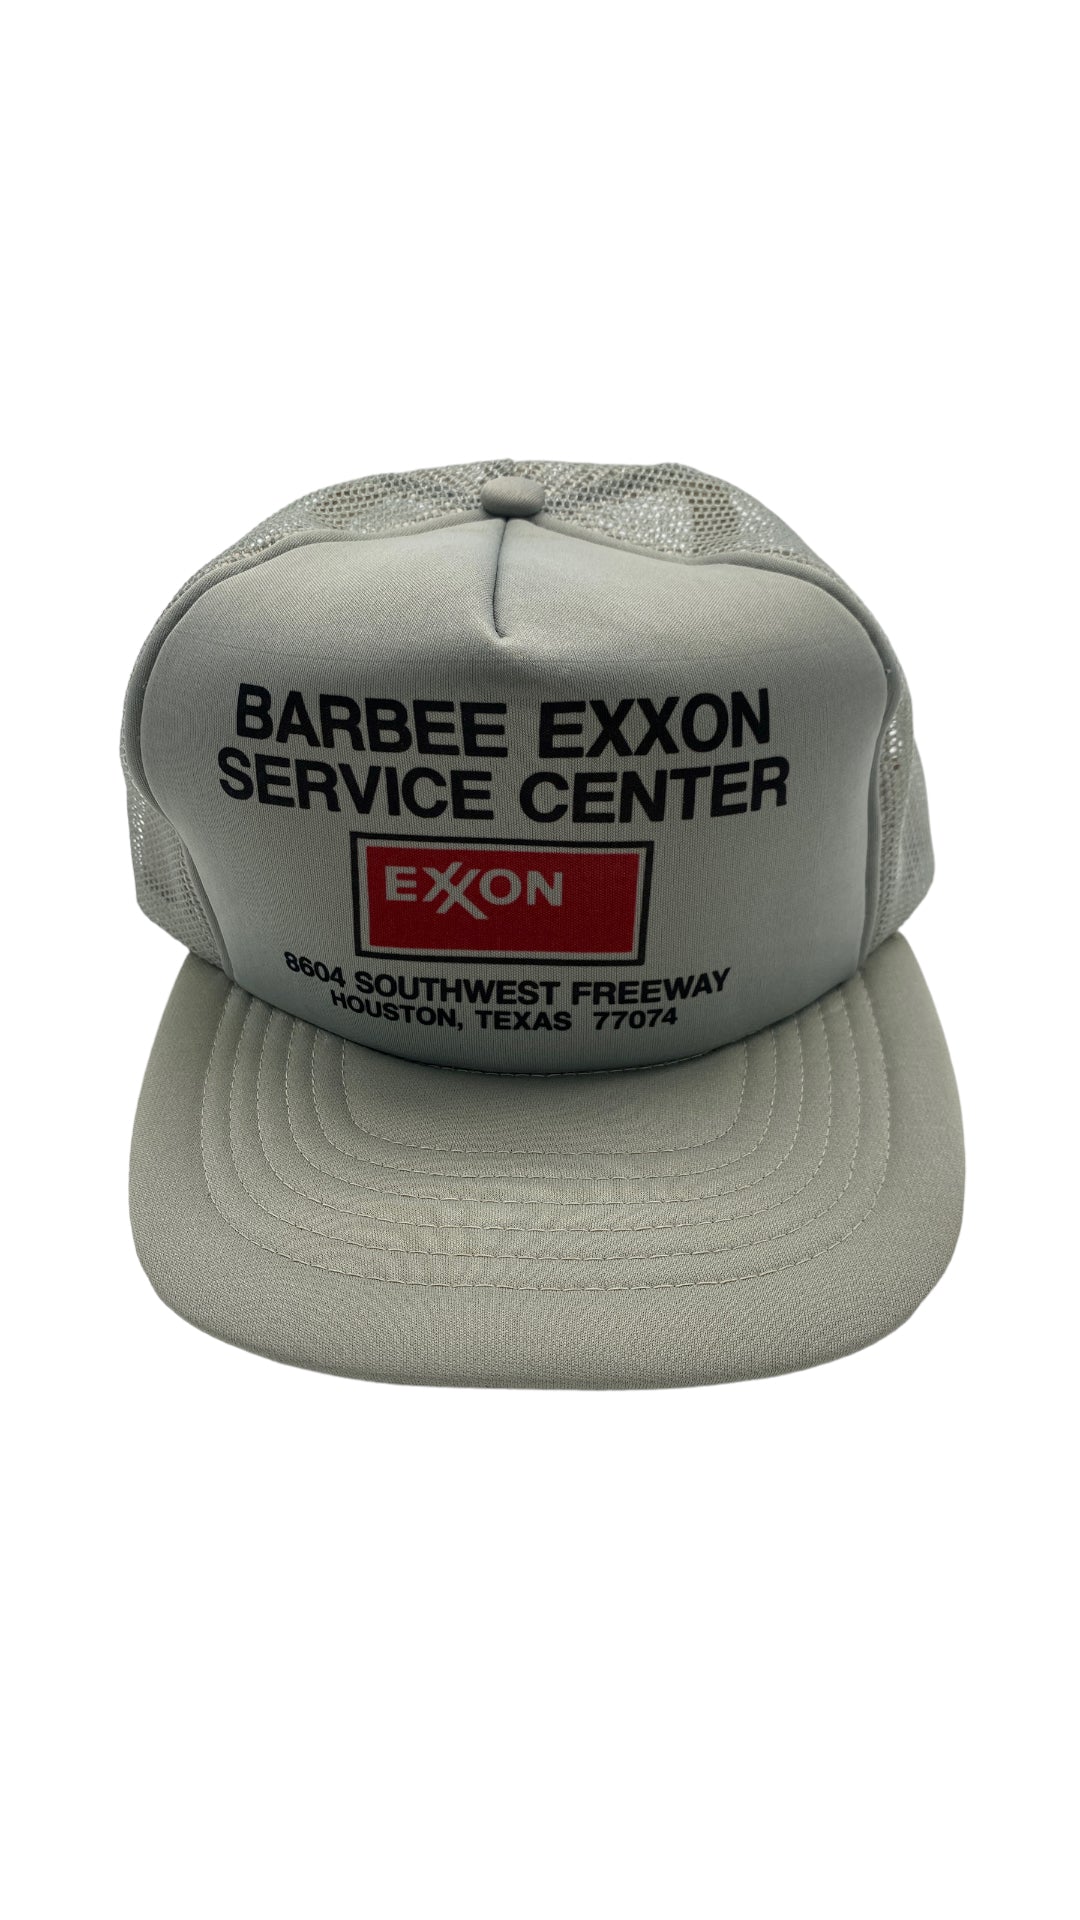 VTG Barbee Exxon SErvice Center Hat